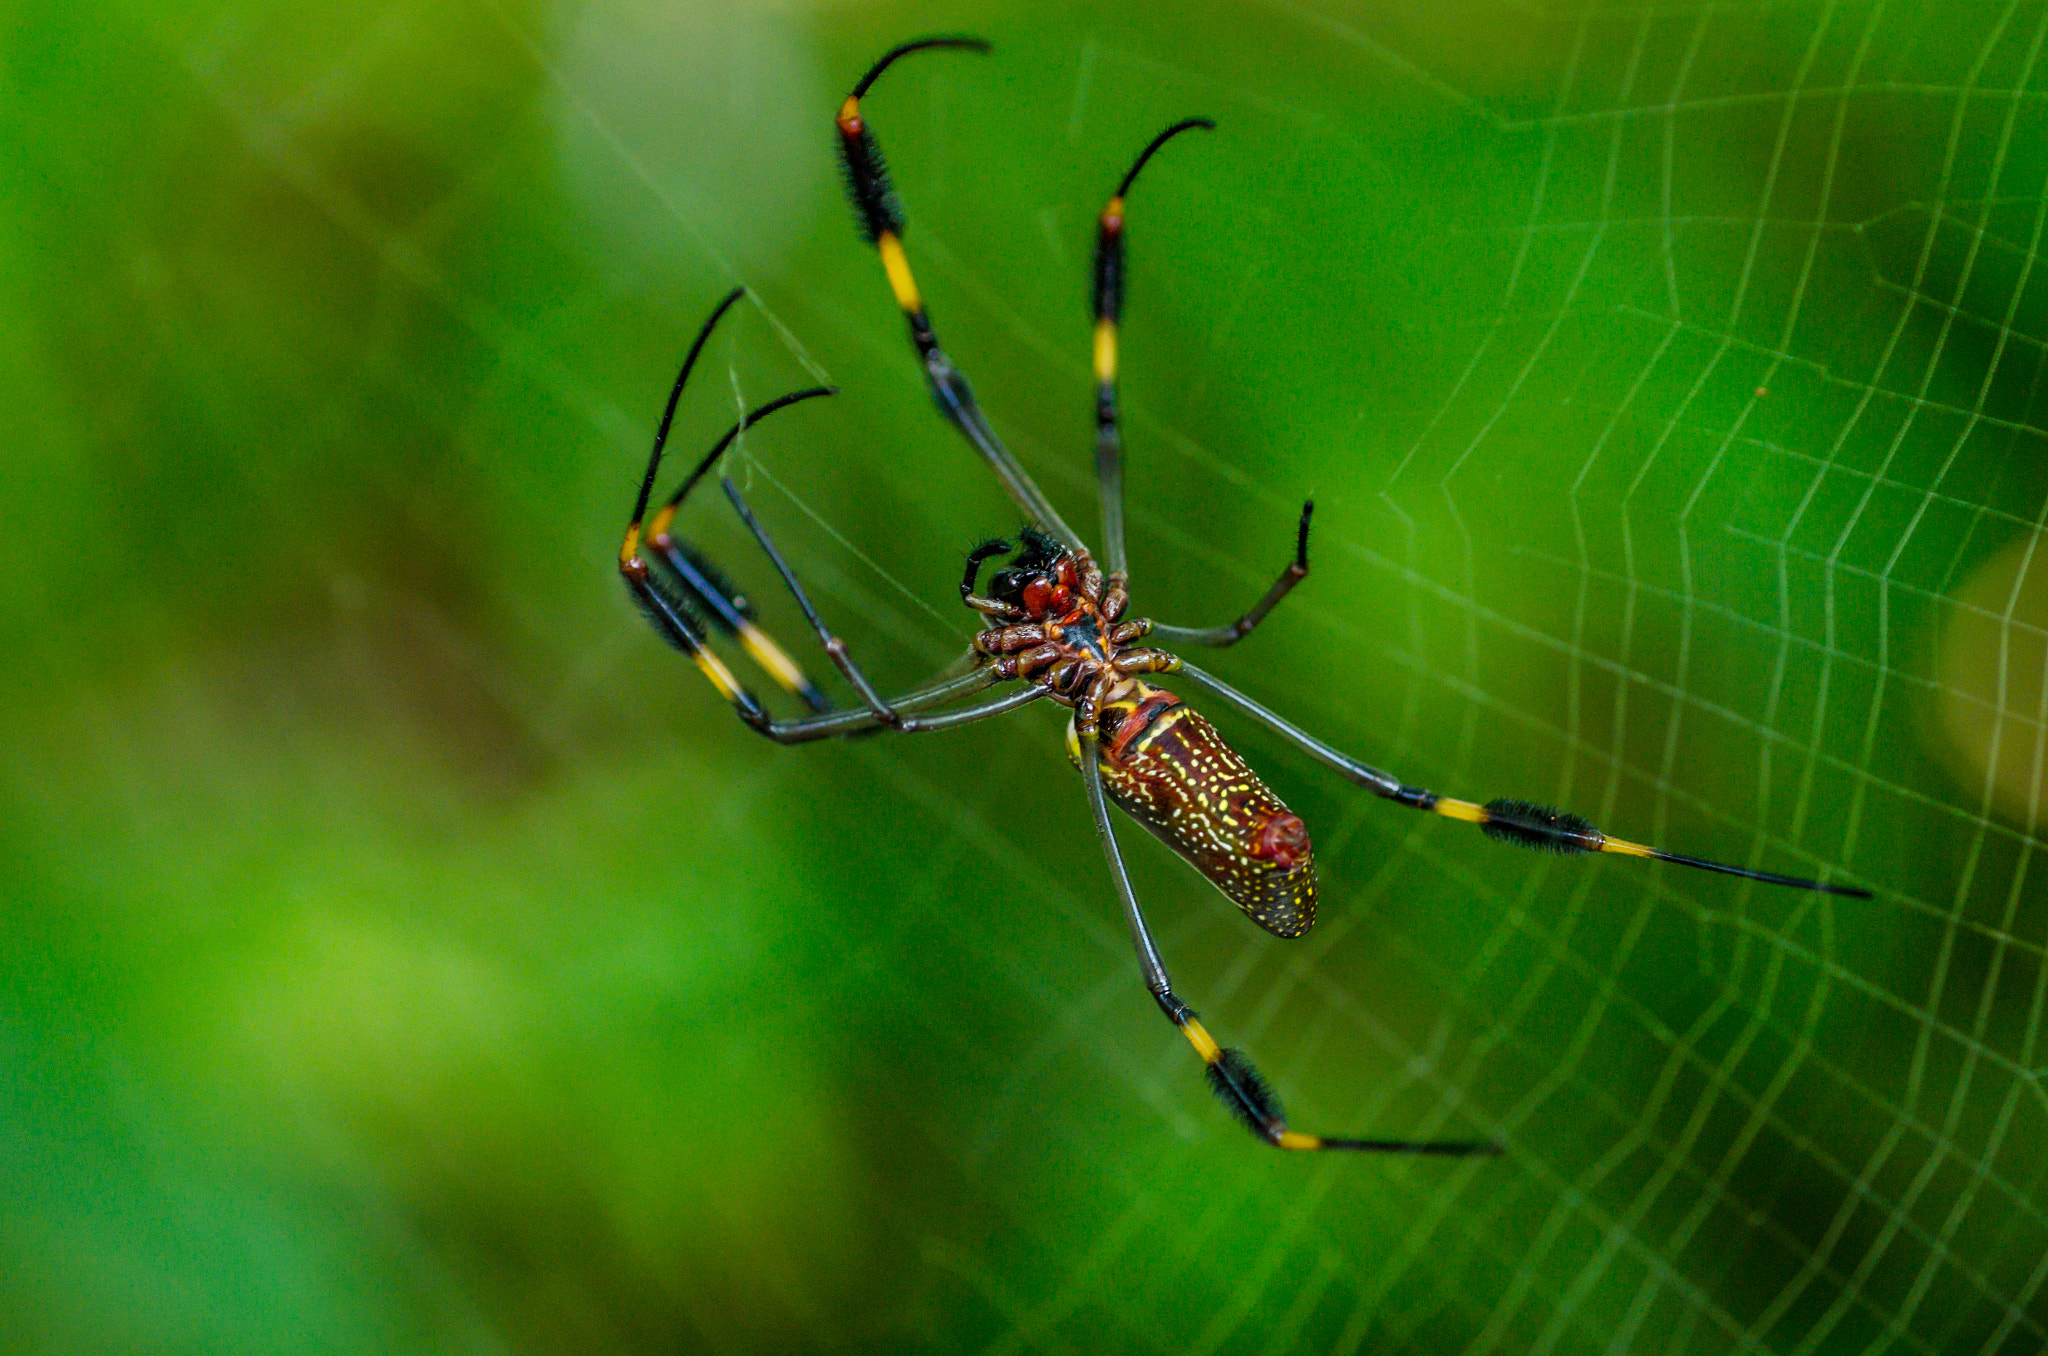 AF Micro-Nikkor 60mm f/2.8 sample photo. Colorful spider photography